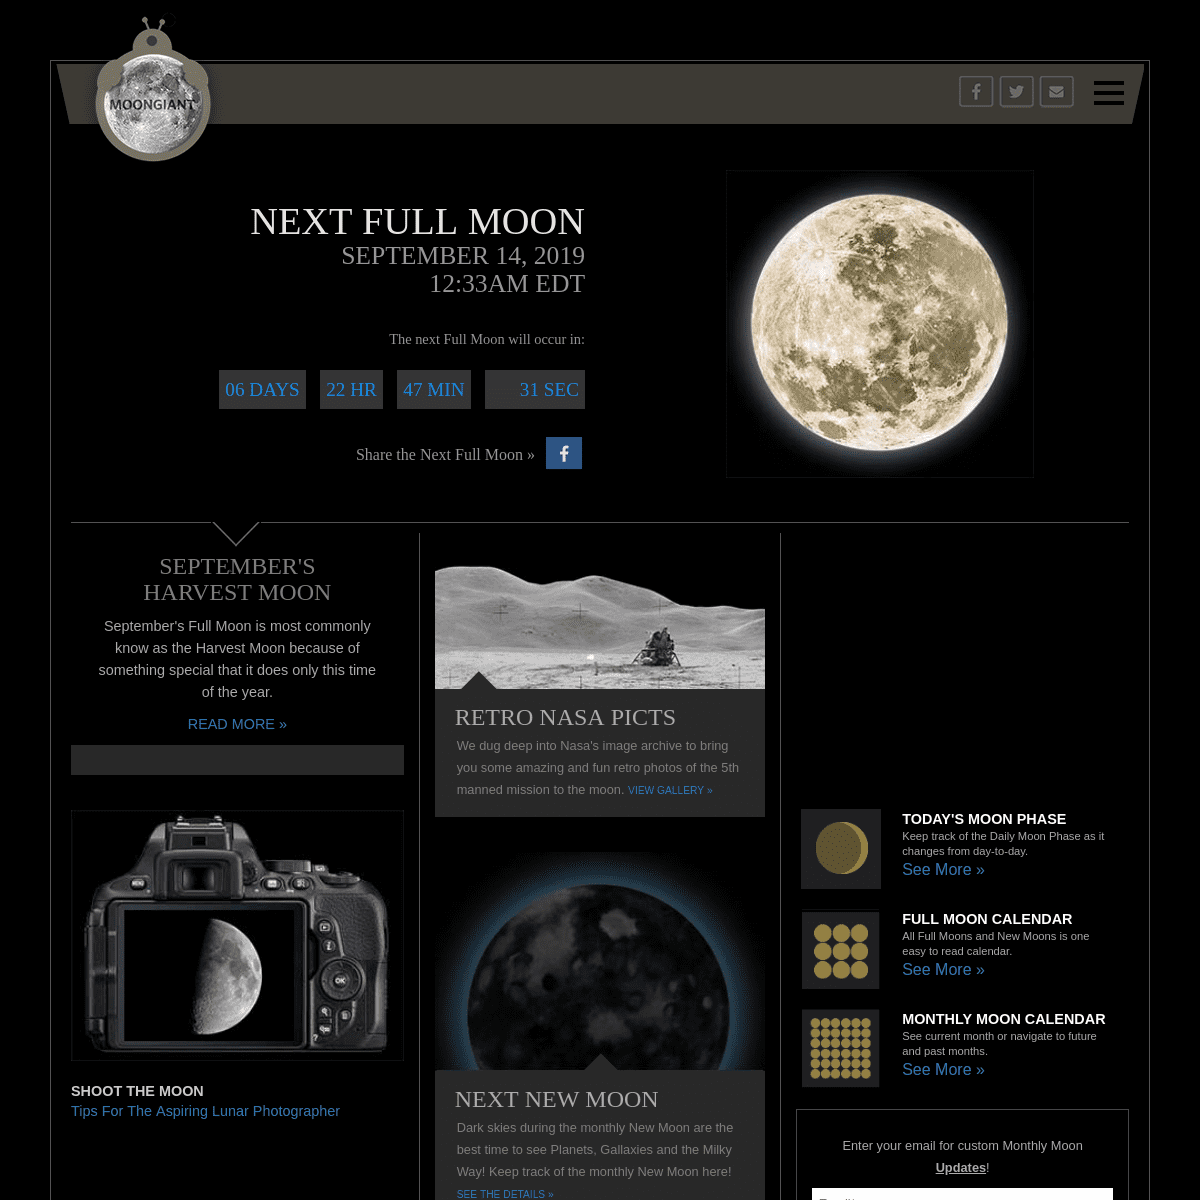 Moongiant > Next Full Moon